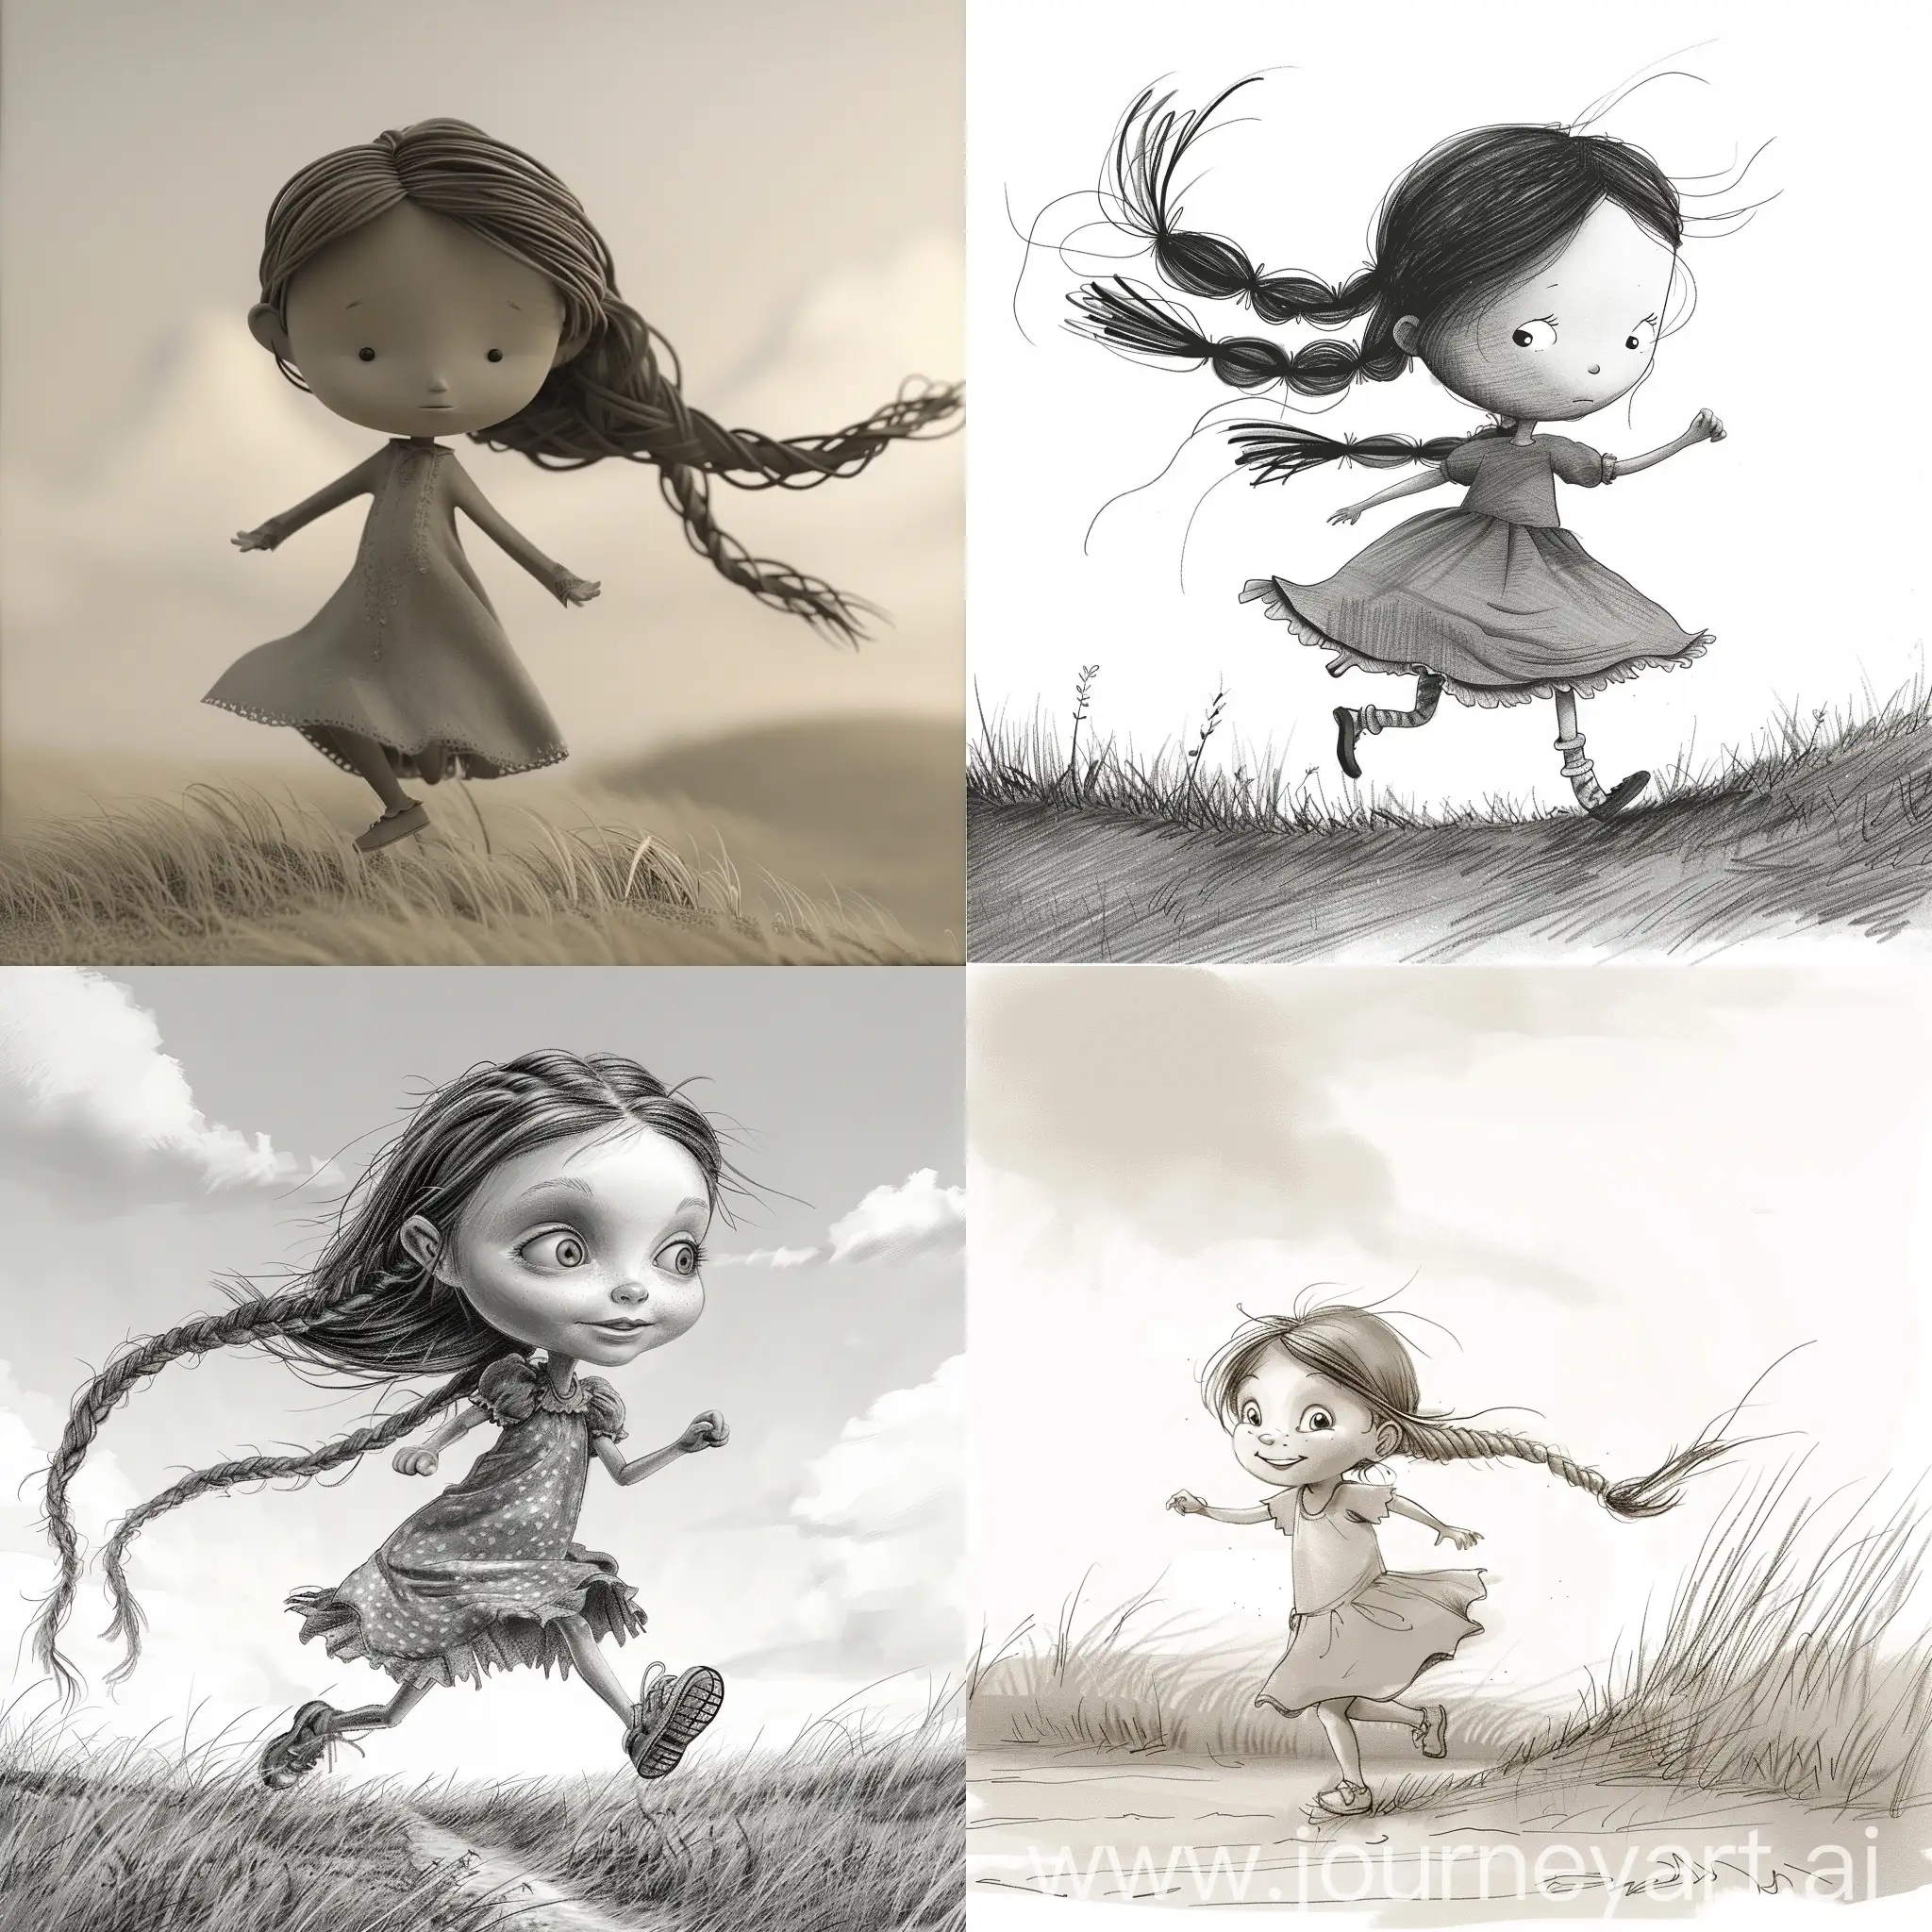 Adorable-Girl-Running-Joyfully-on-the-Prairie-in-Braids-and-Dress